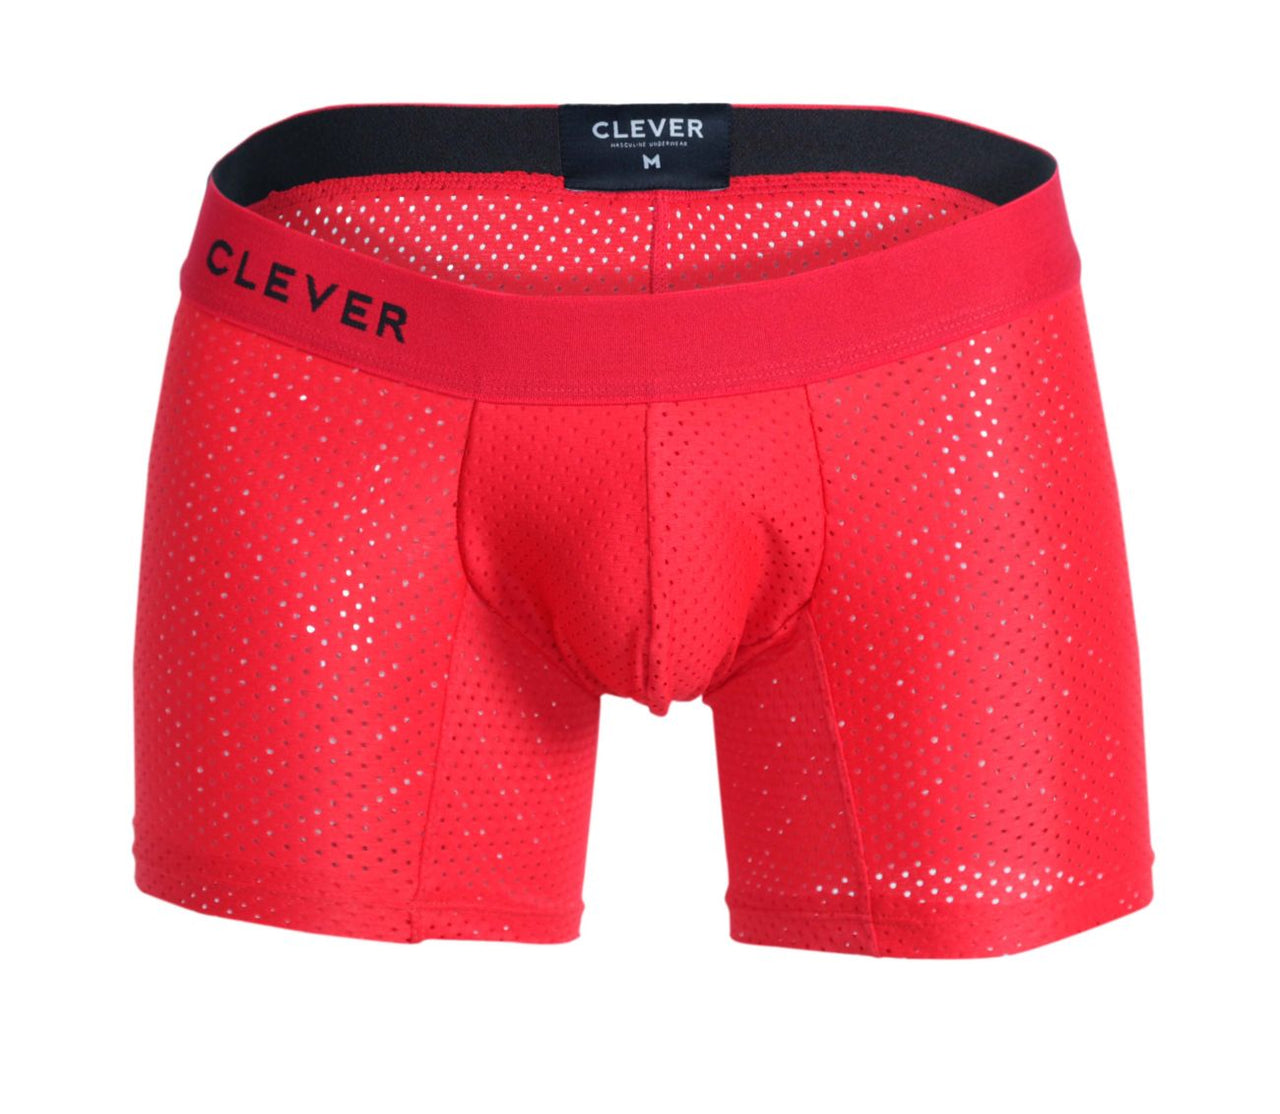 Clever 1260 Euphoria Boxer Briefs Color Red - Pikante Underwear